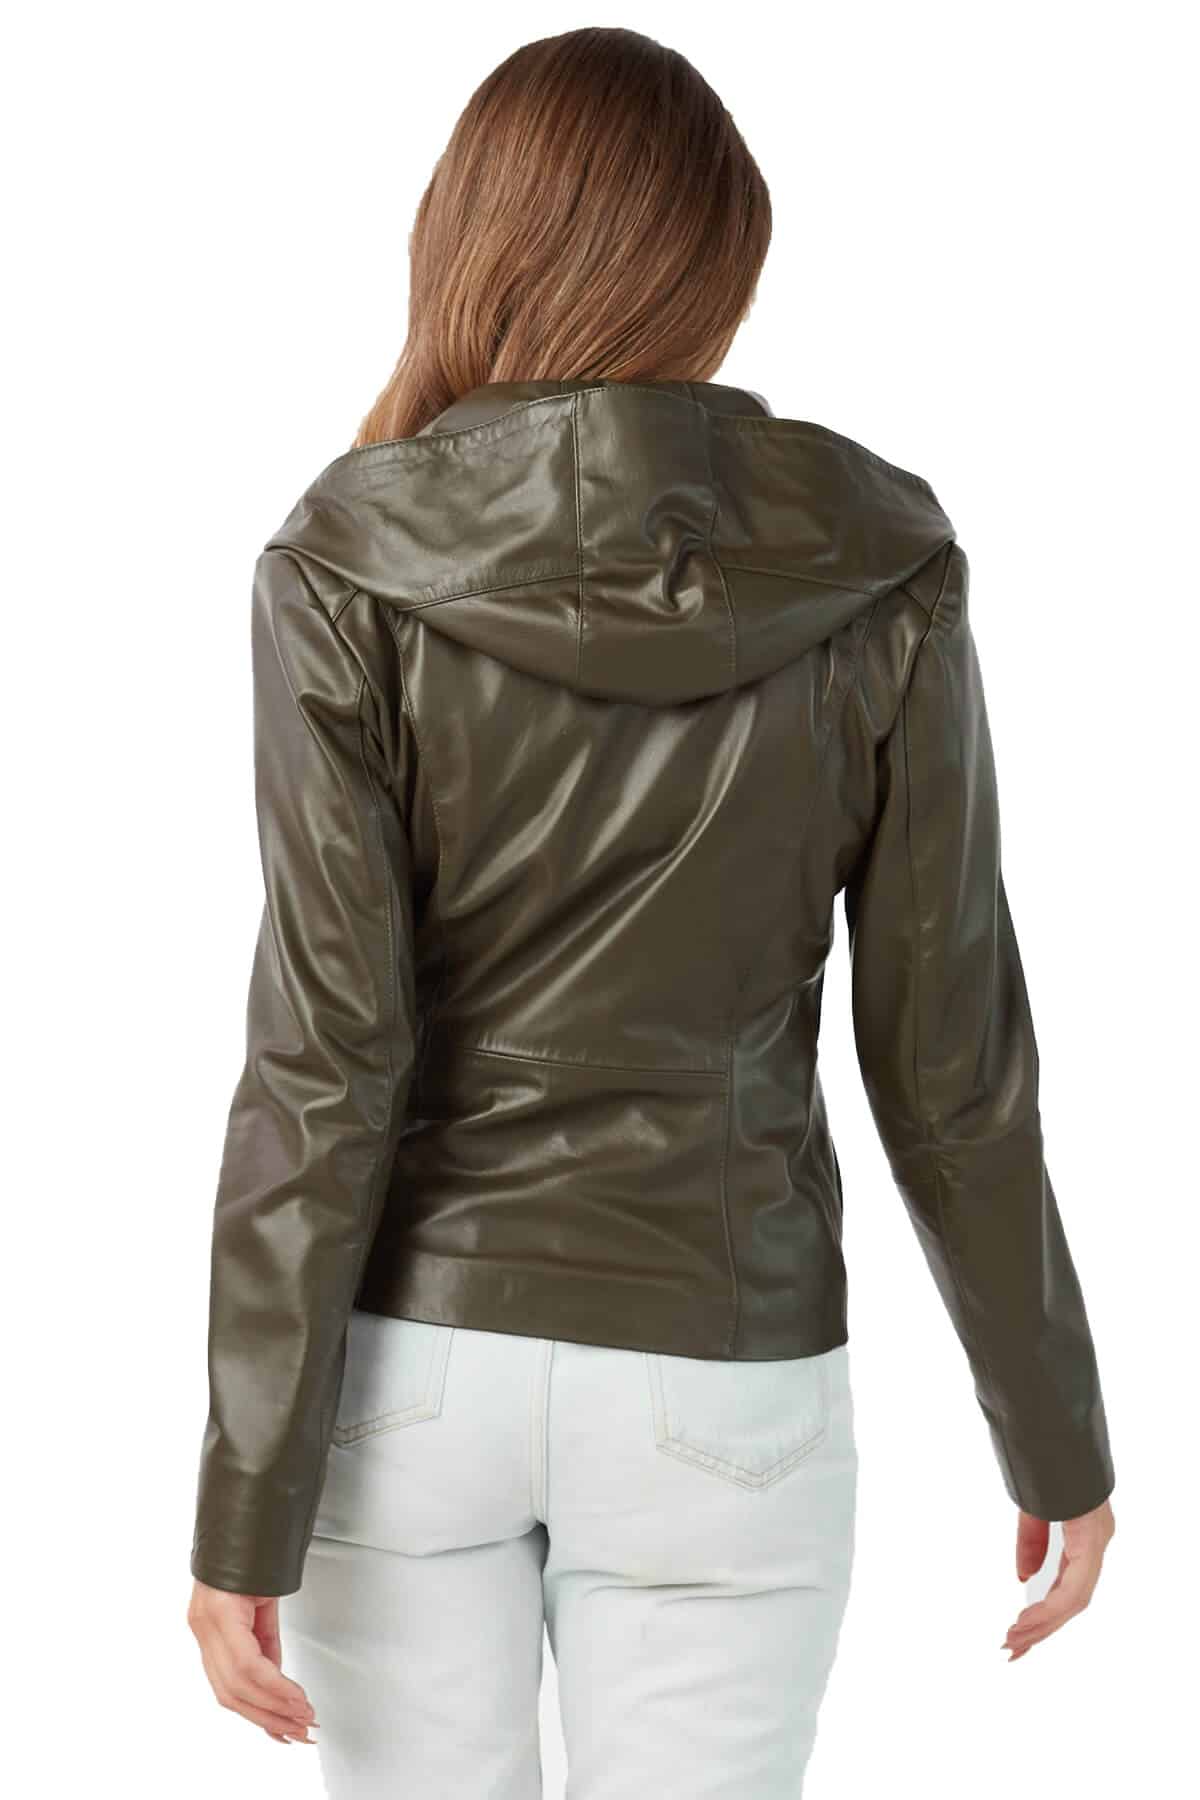 Miss June vest Green M discount 64% WOMEN FASHION Jackets Fur 